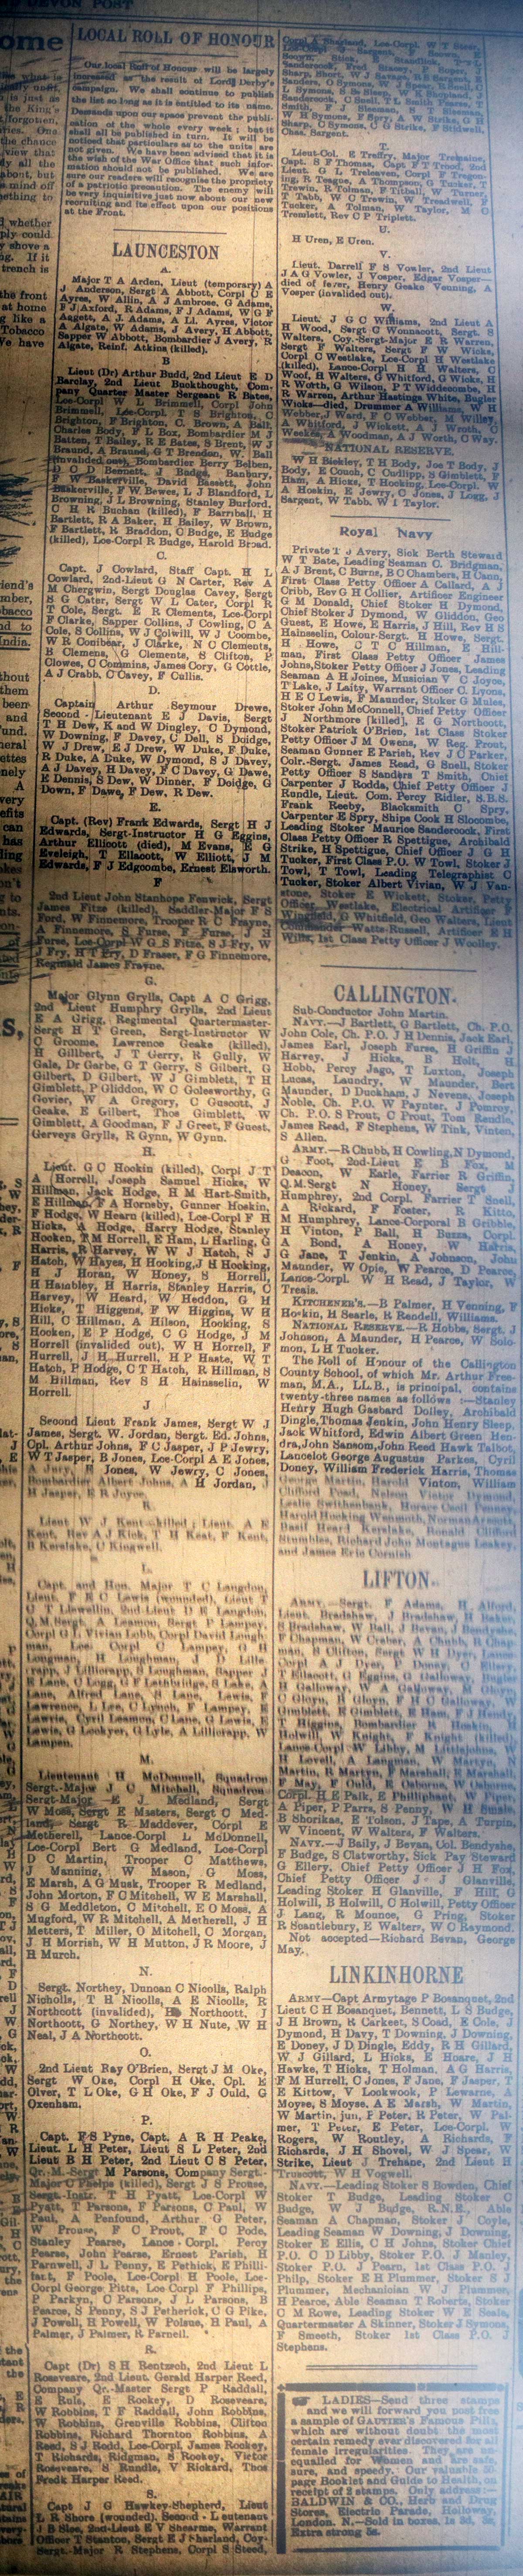 Launceston Roll of Honour January 1st, 1916